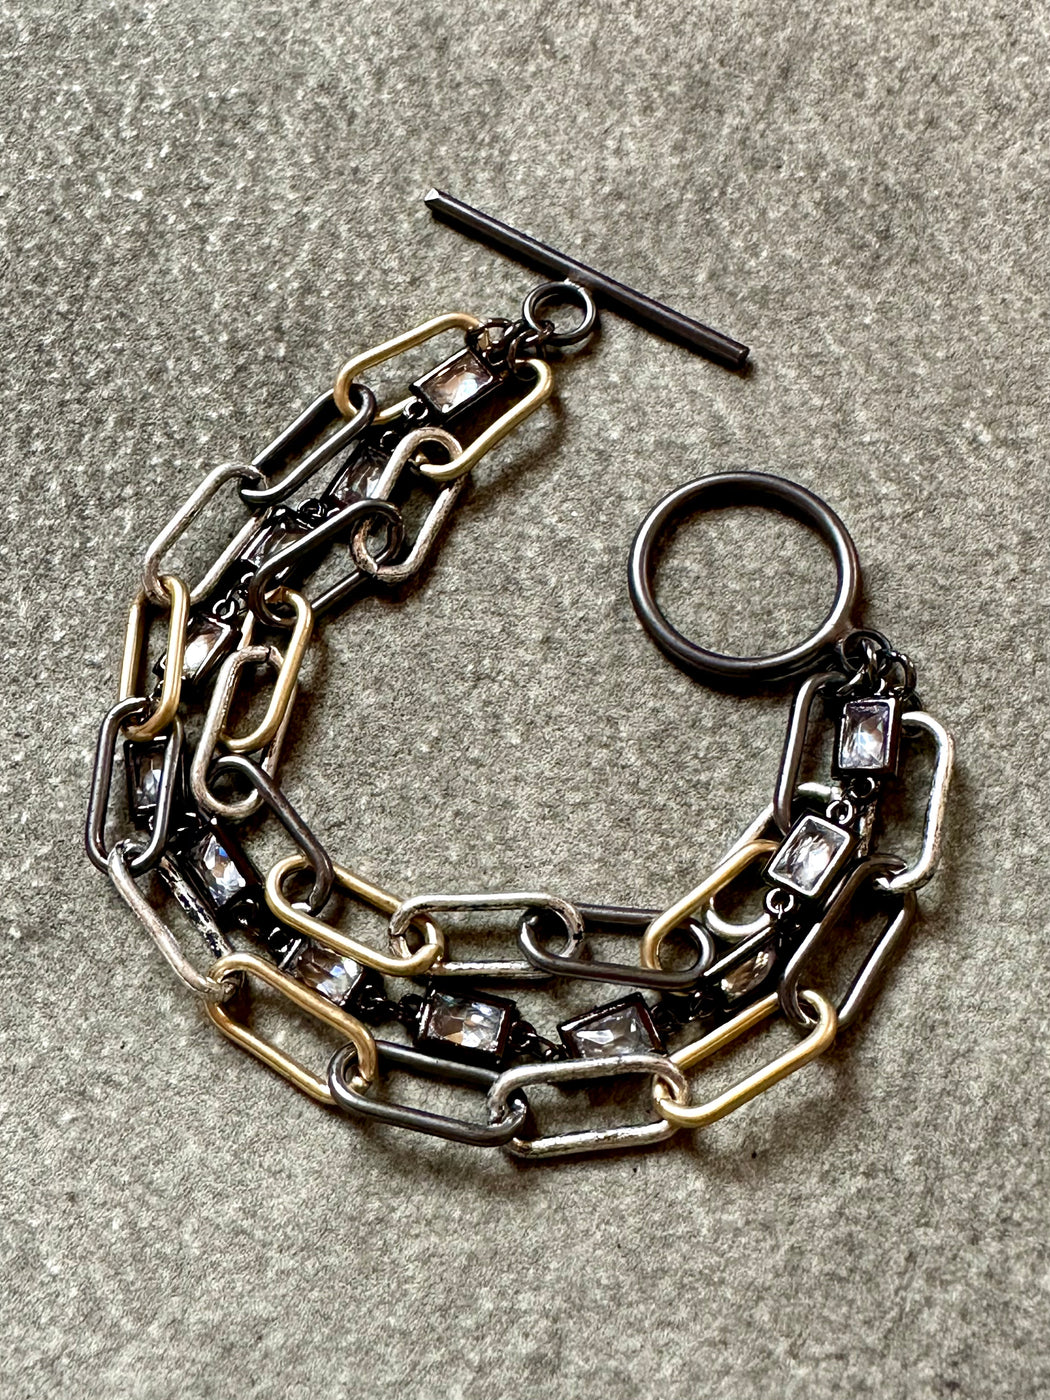 Multichain "Paperclip" bracelet by VB & Co.